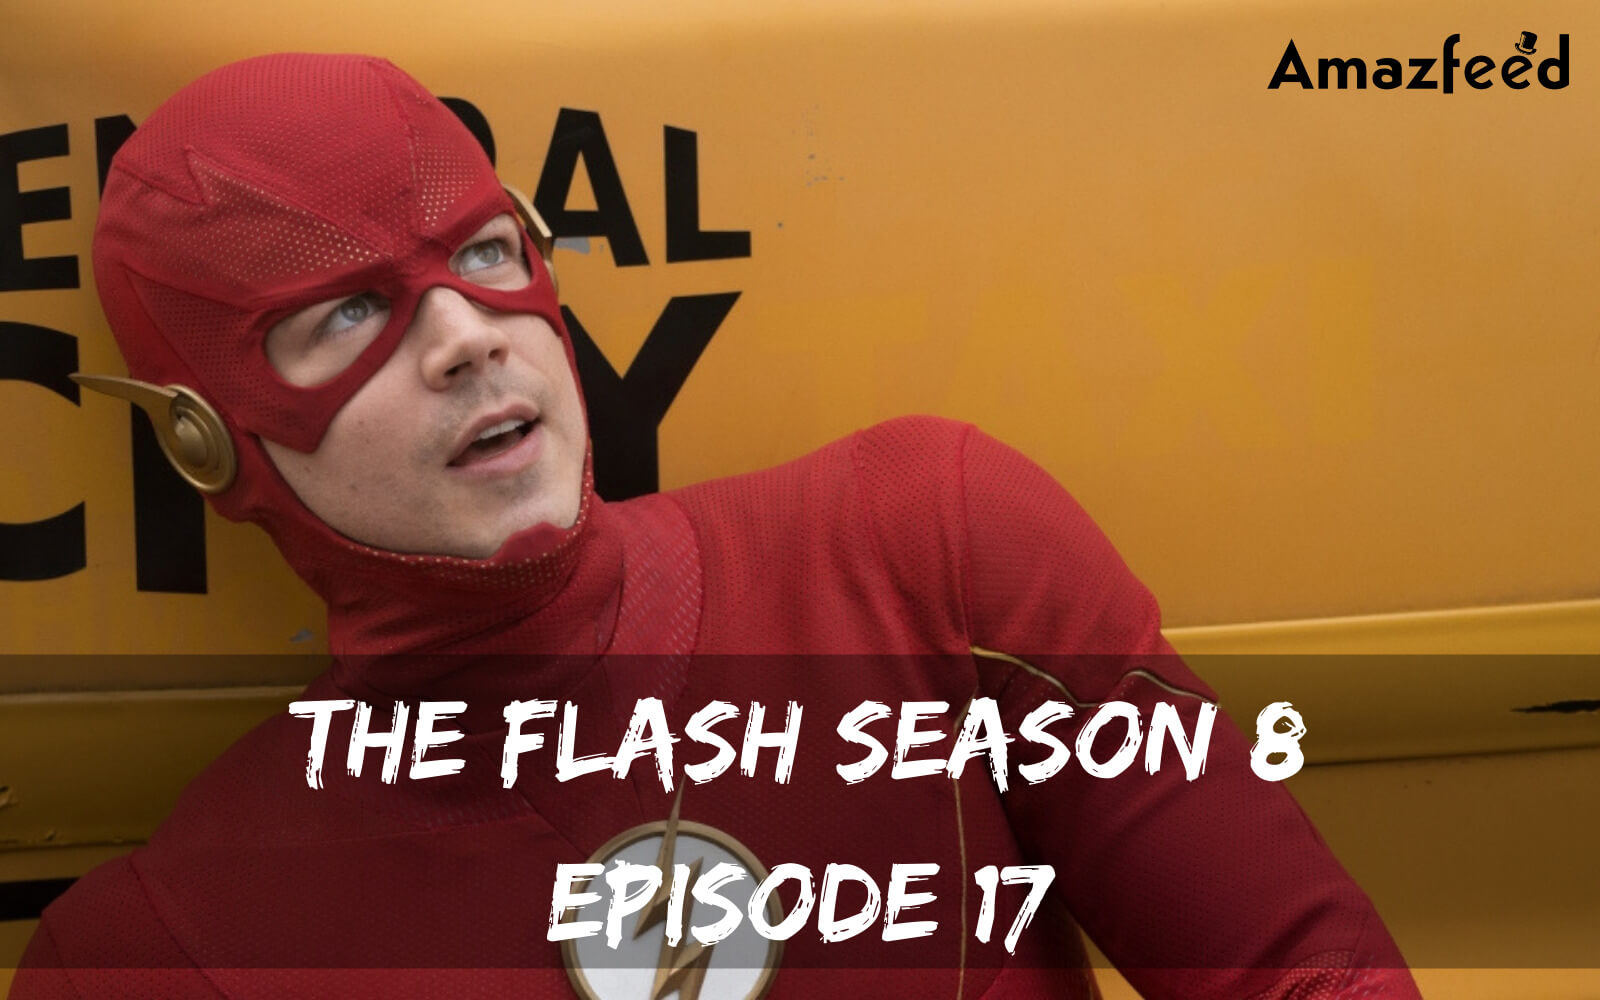 The Flash Season 8 Episode 17 release date